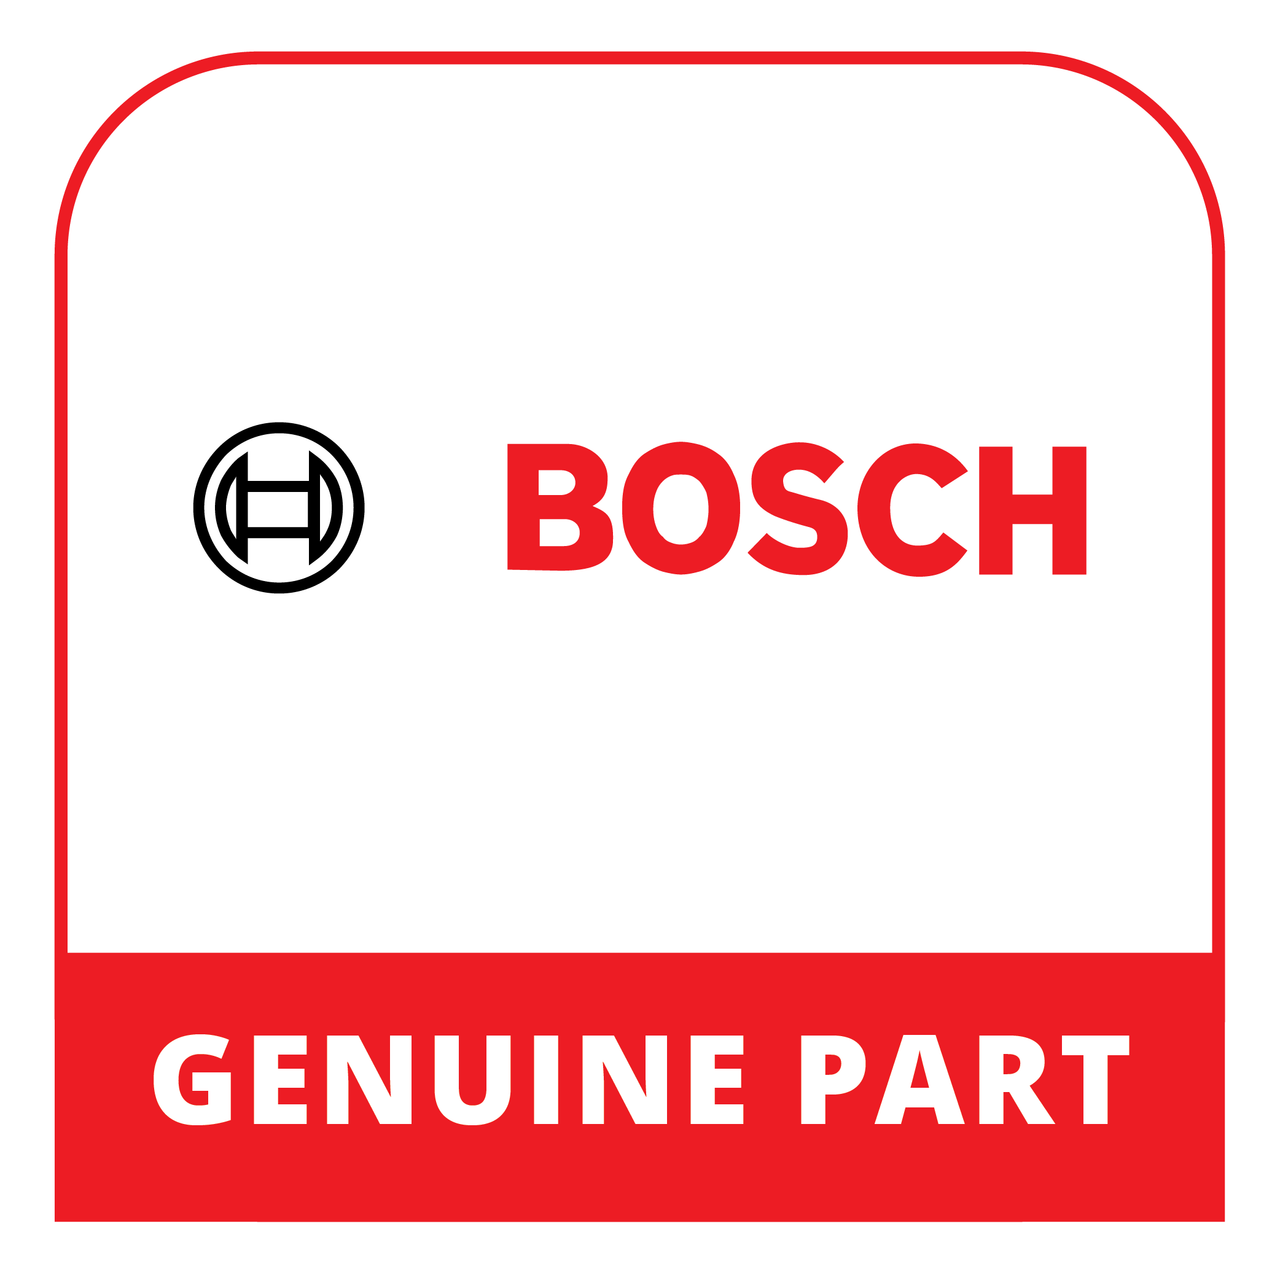 Bosch (Thermador) 20000813 - Panel-Facia - Genuine Bosch (Thermador) Part